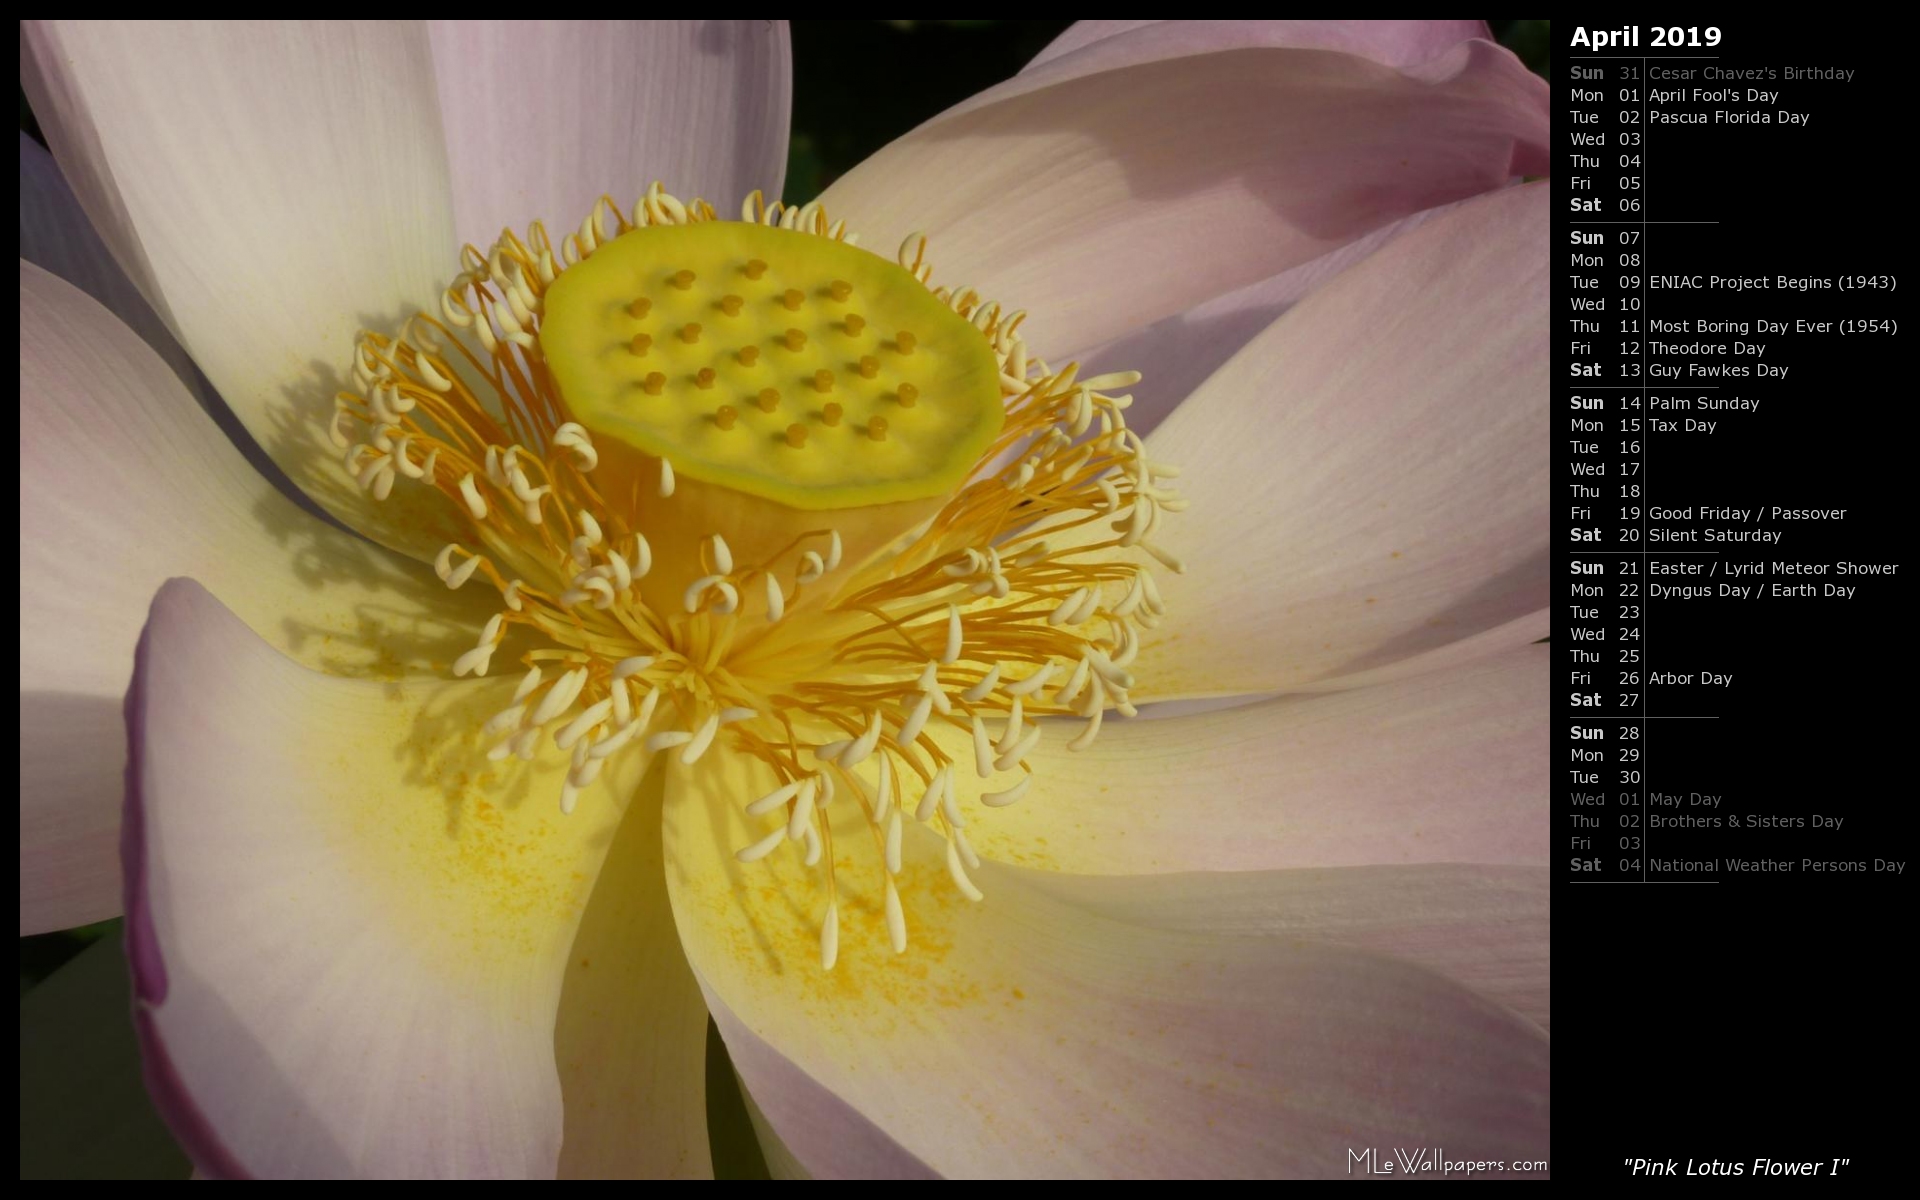 MLeWallpapers.com - Pink Lotus Flower I (Calendar)